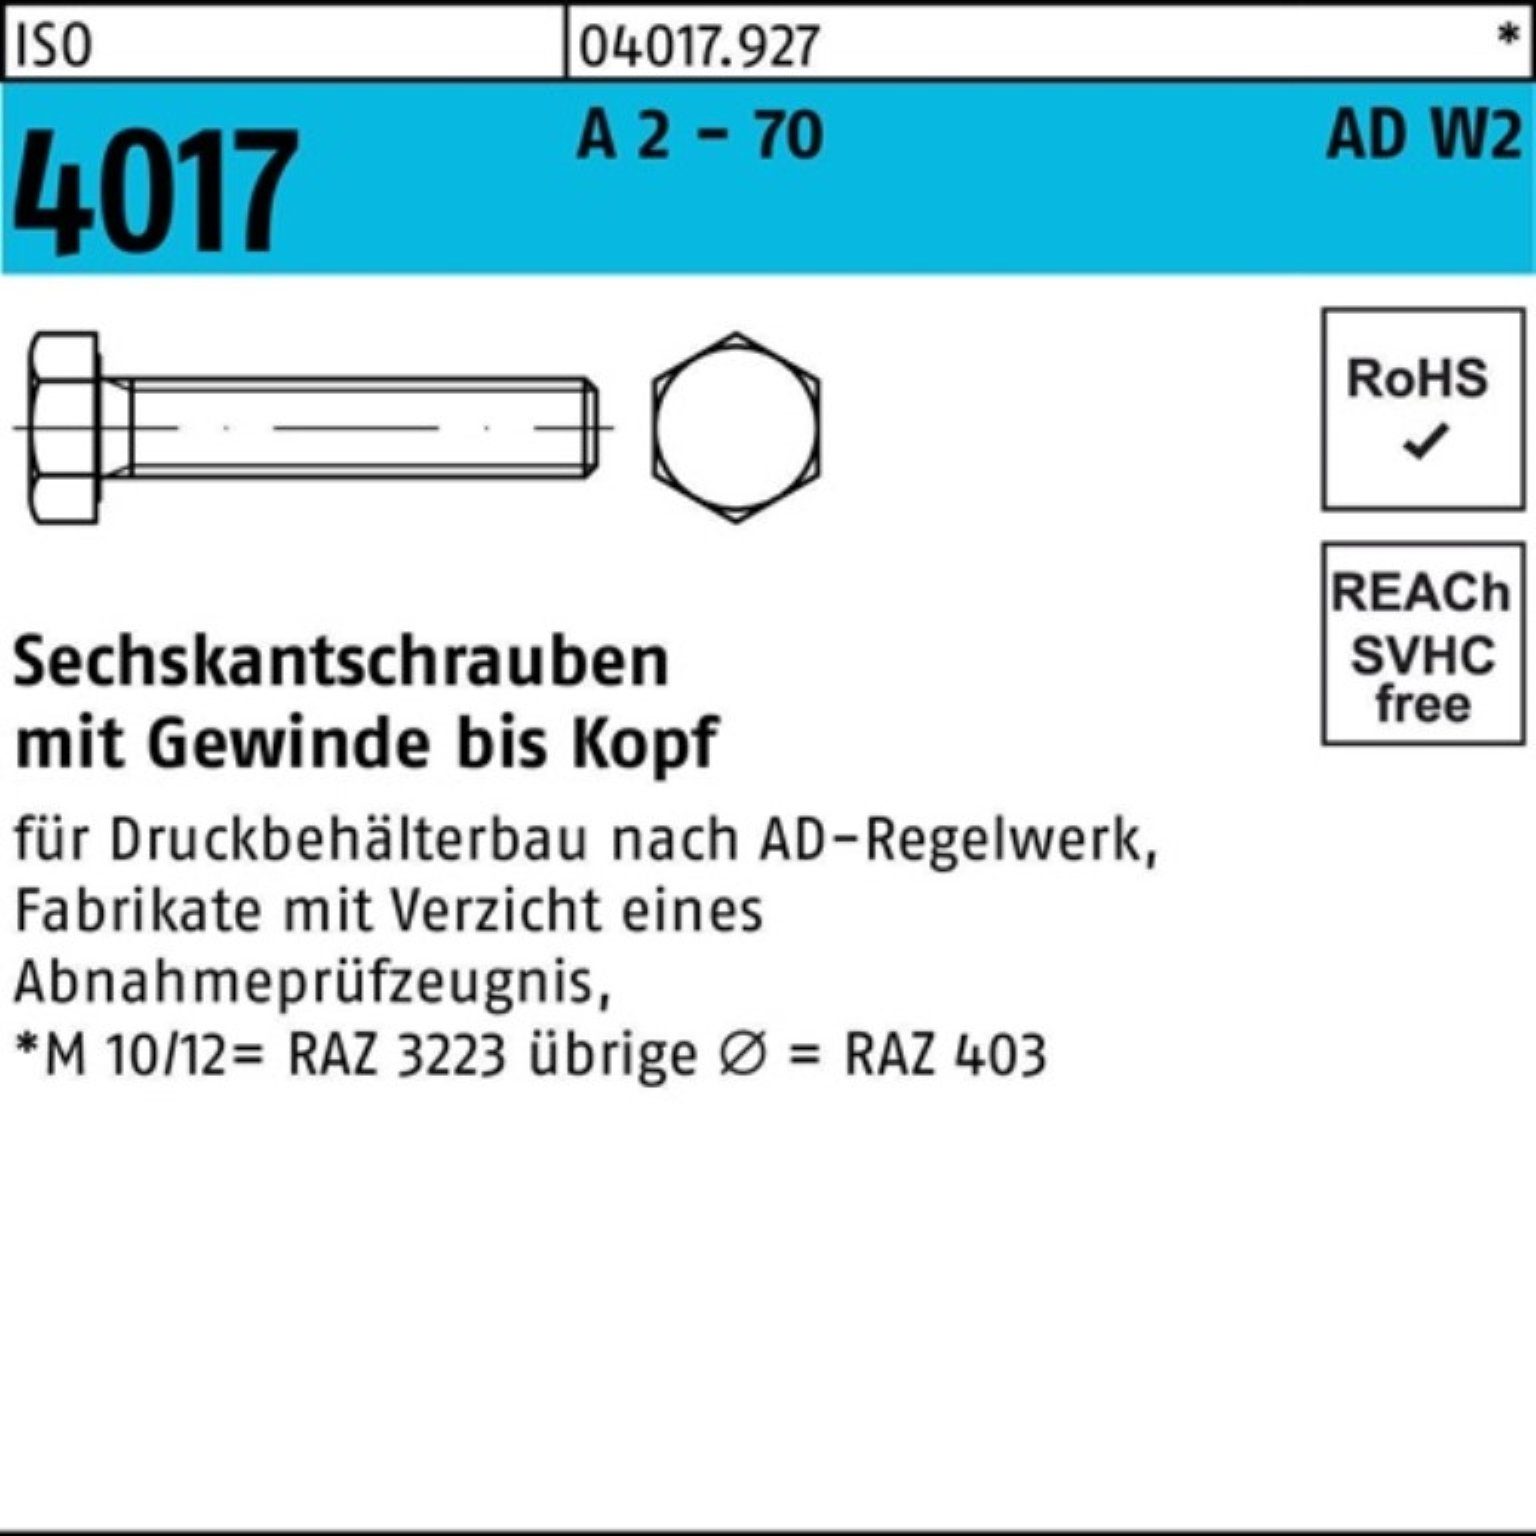 Bufab Sechskantschraube 100er Pack Sechskantschraube VG 25 - 2 A 35 70 4017 M20x AD-W2 St ISO